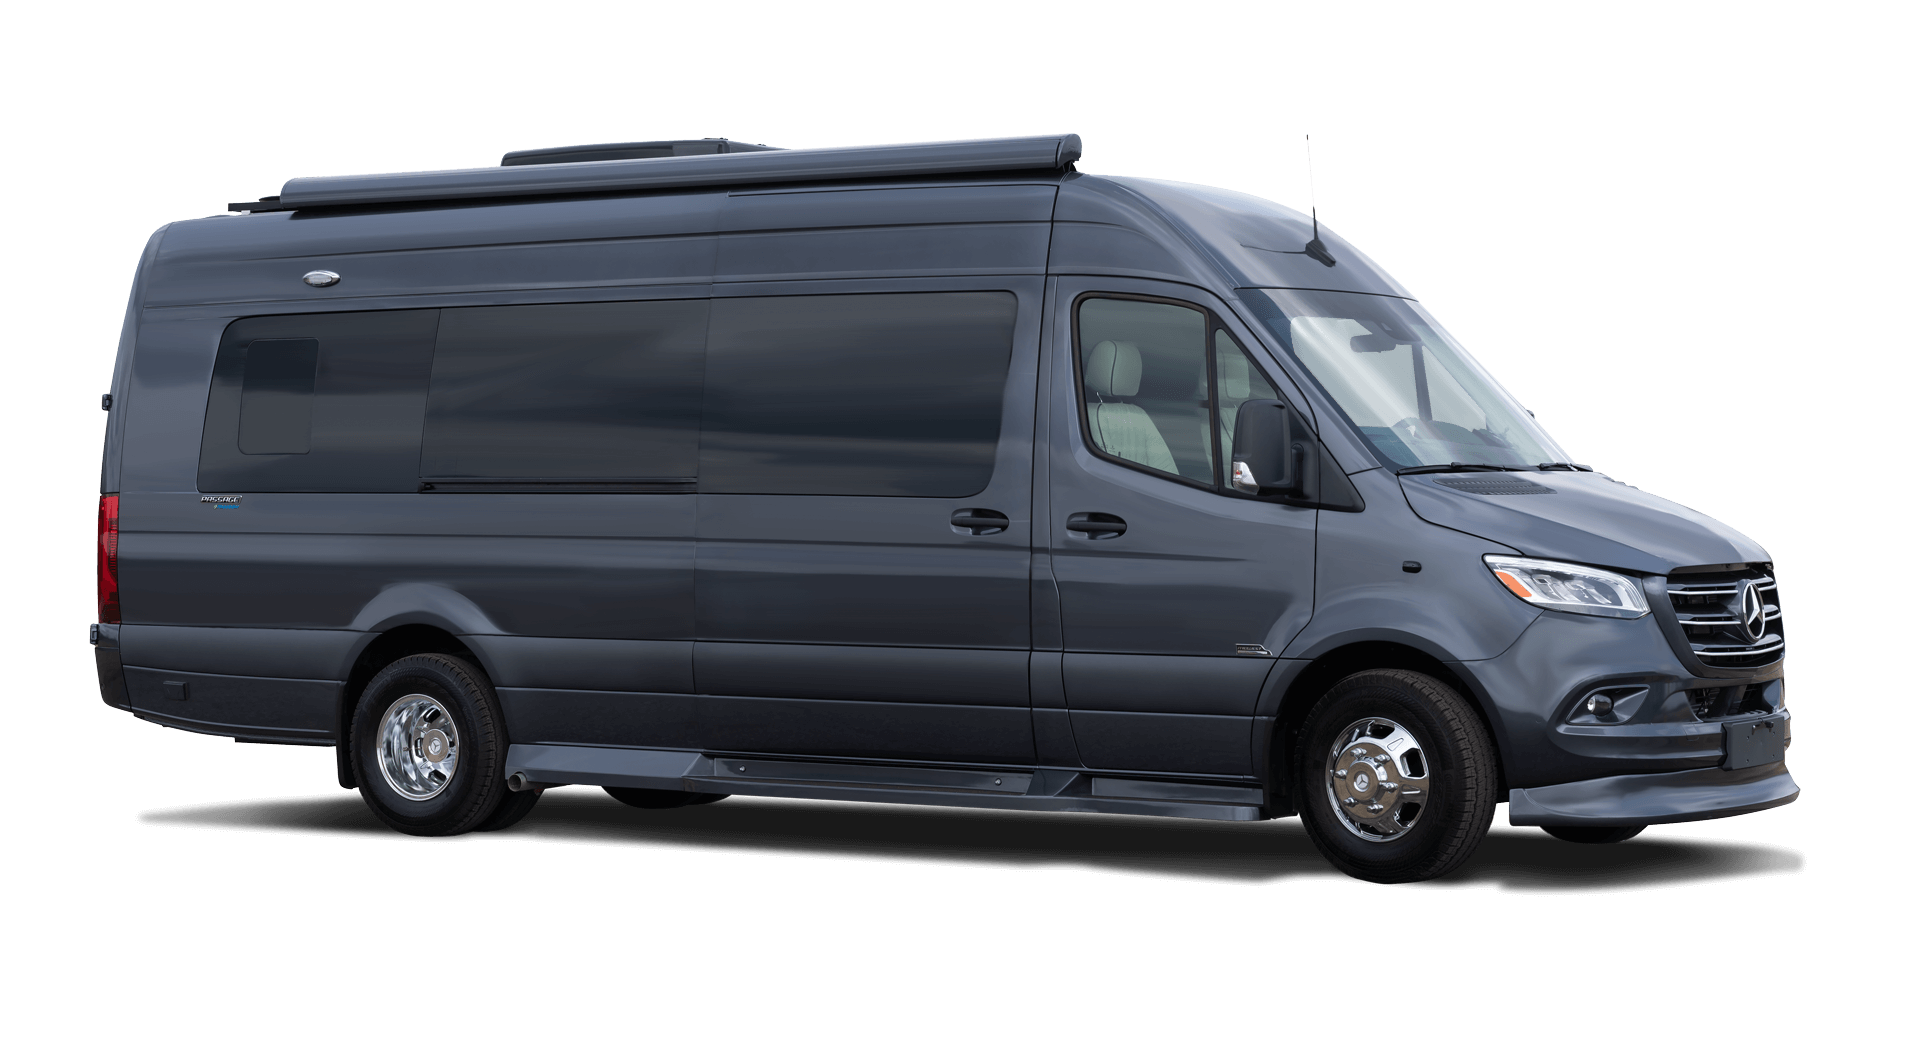 Luxury Mobility Sprinter Van - Midwest Automotive Designs